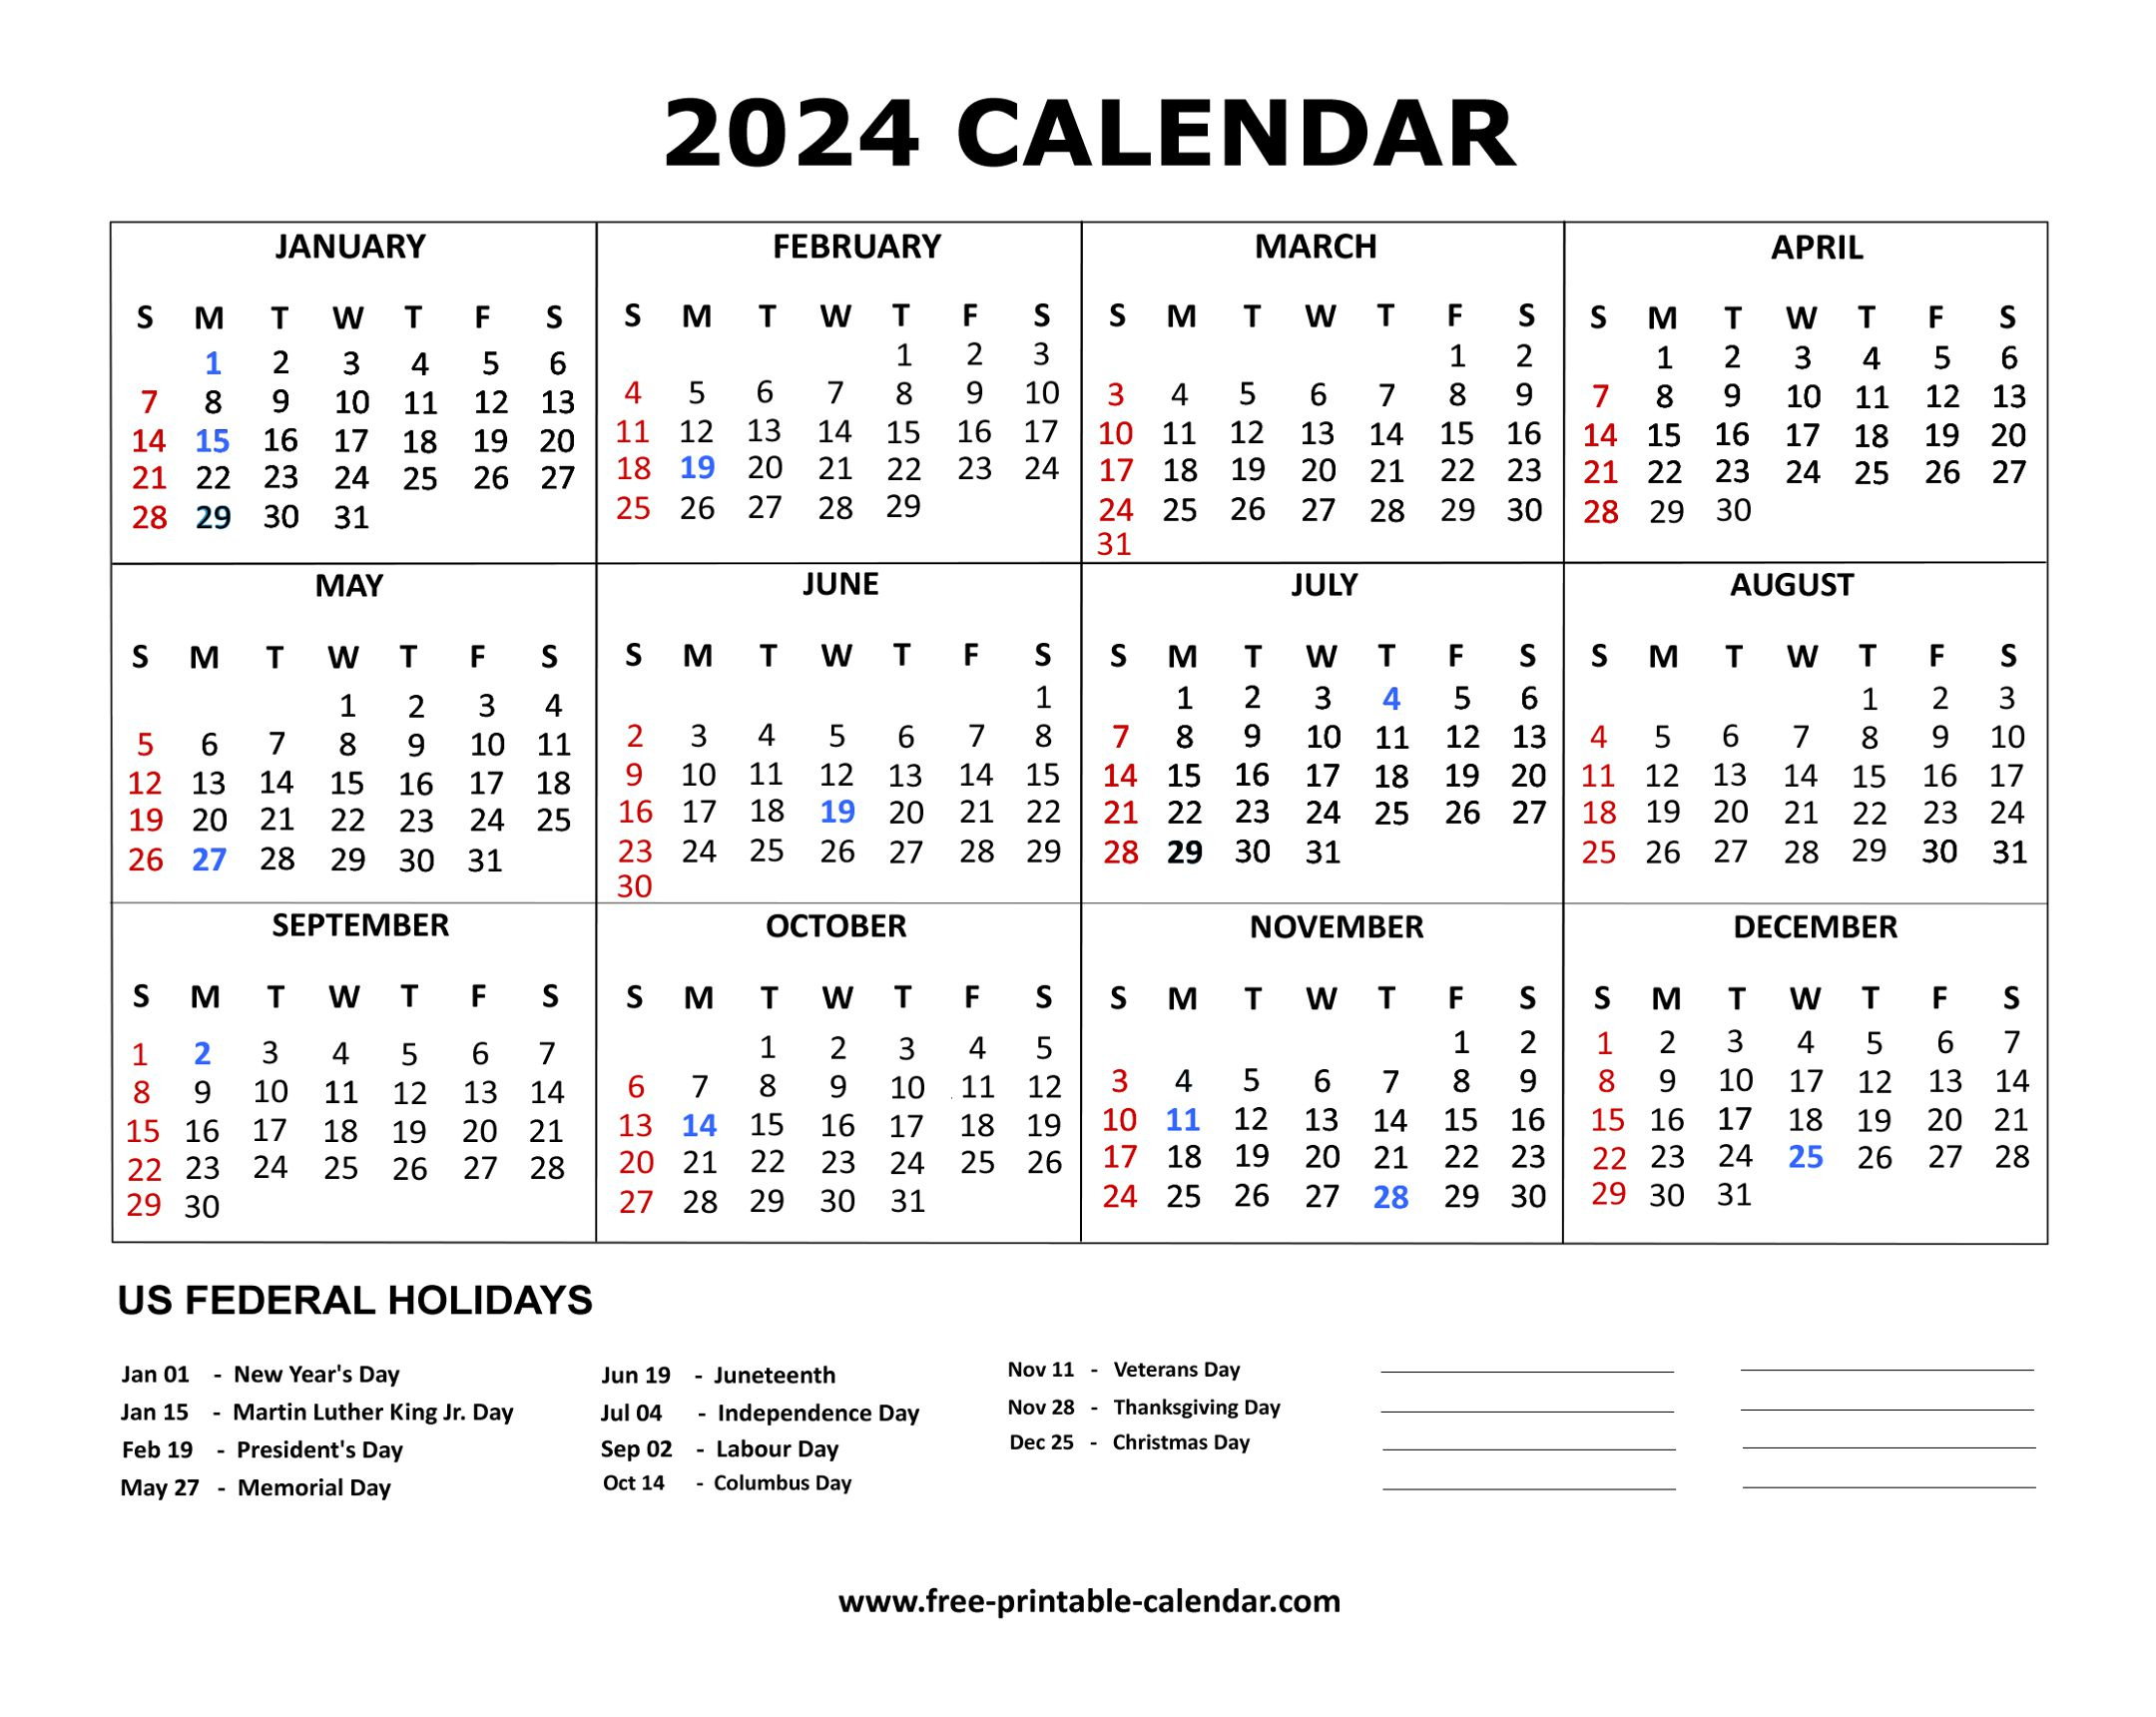 2024 Calendar | Printable Calendar For 2024 With Holidays Free Download